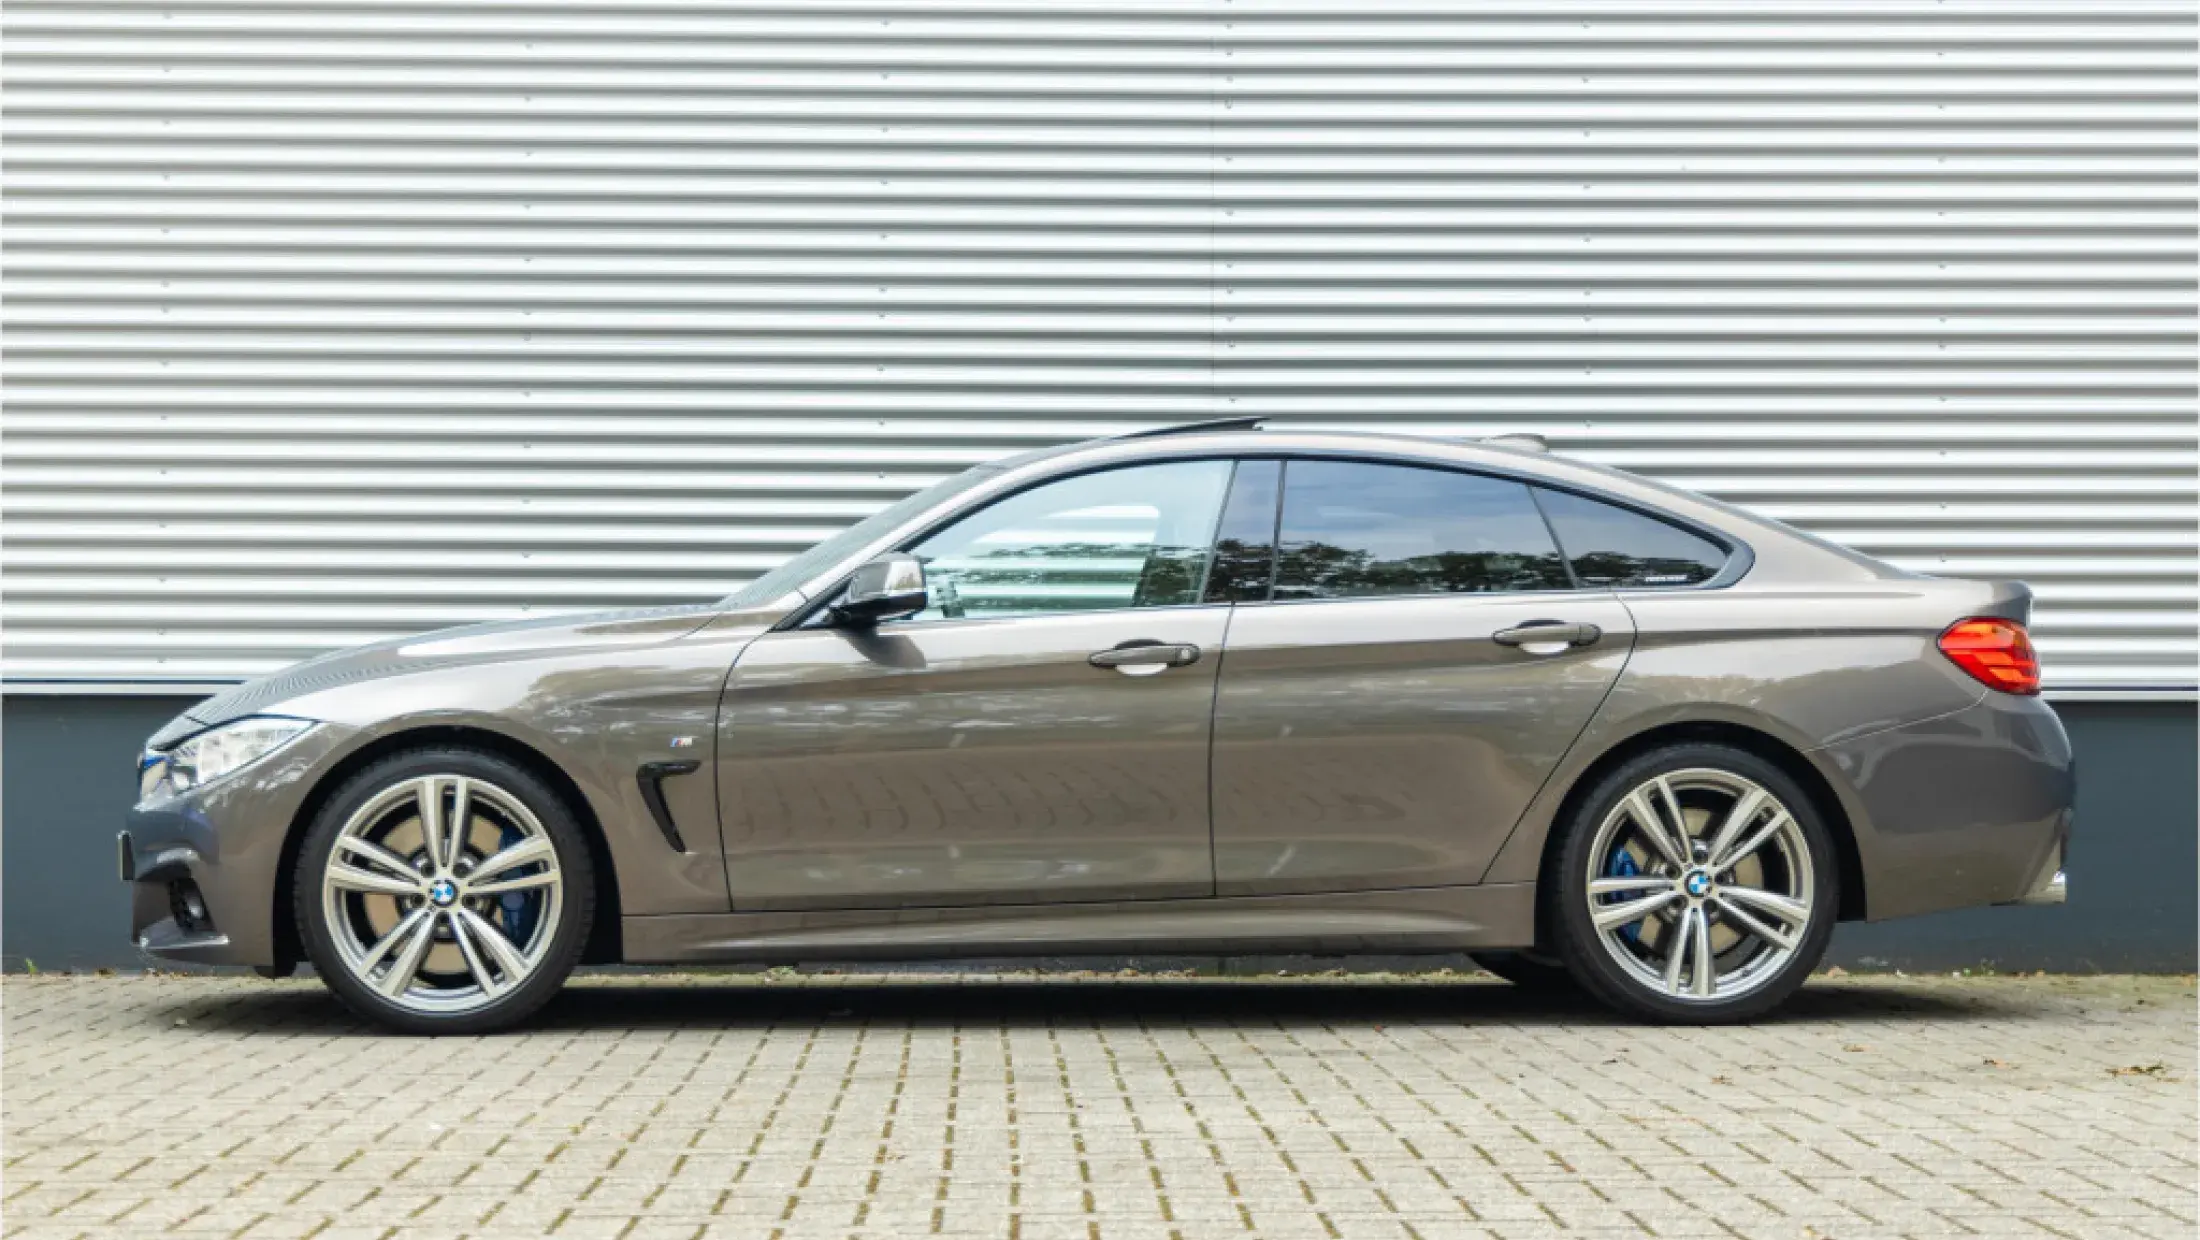 BMW 440i Gran Coupe Champagner Quarz Metallic Individuak erweiterte Lederausstattung Kaschmirbei